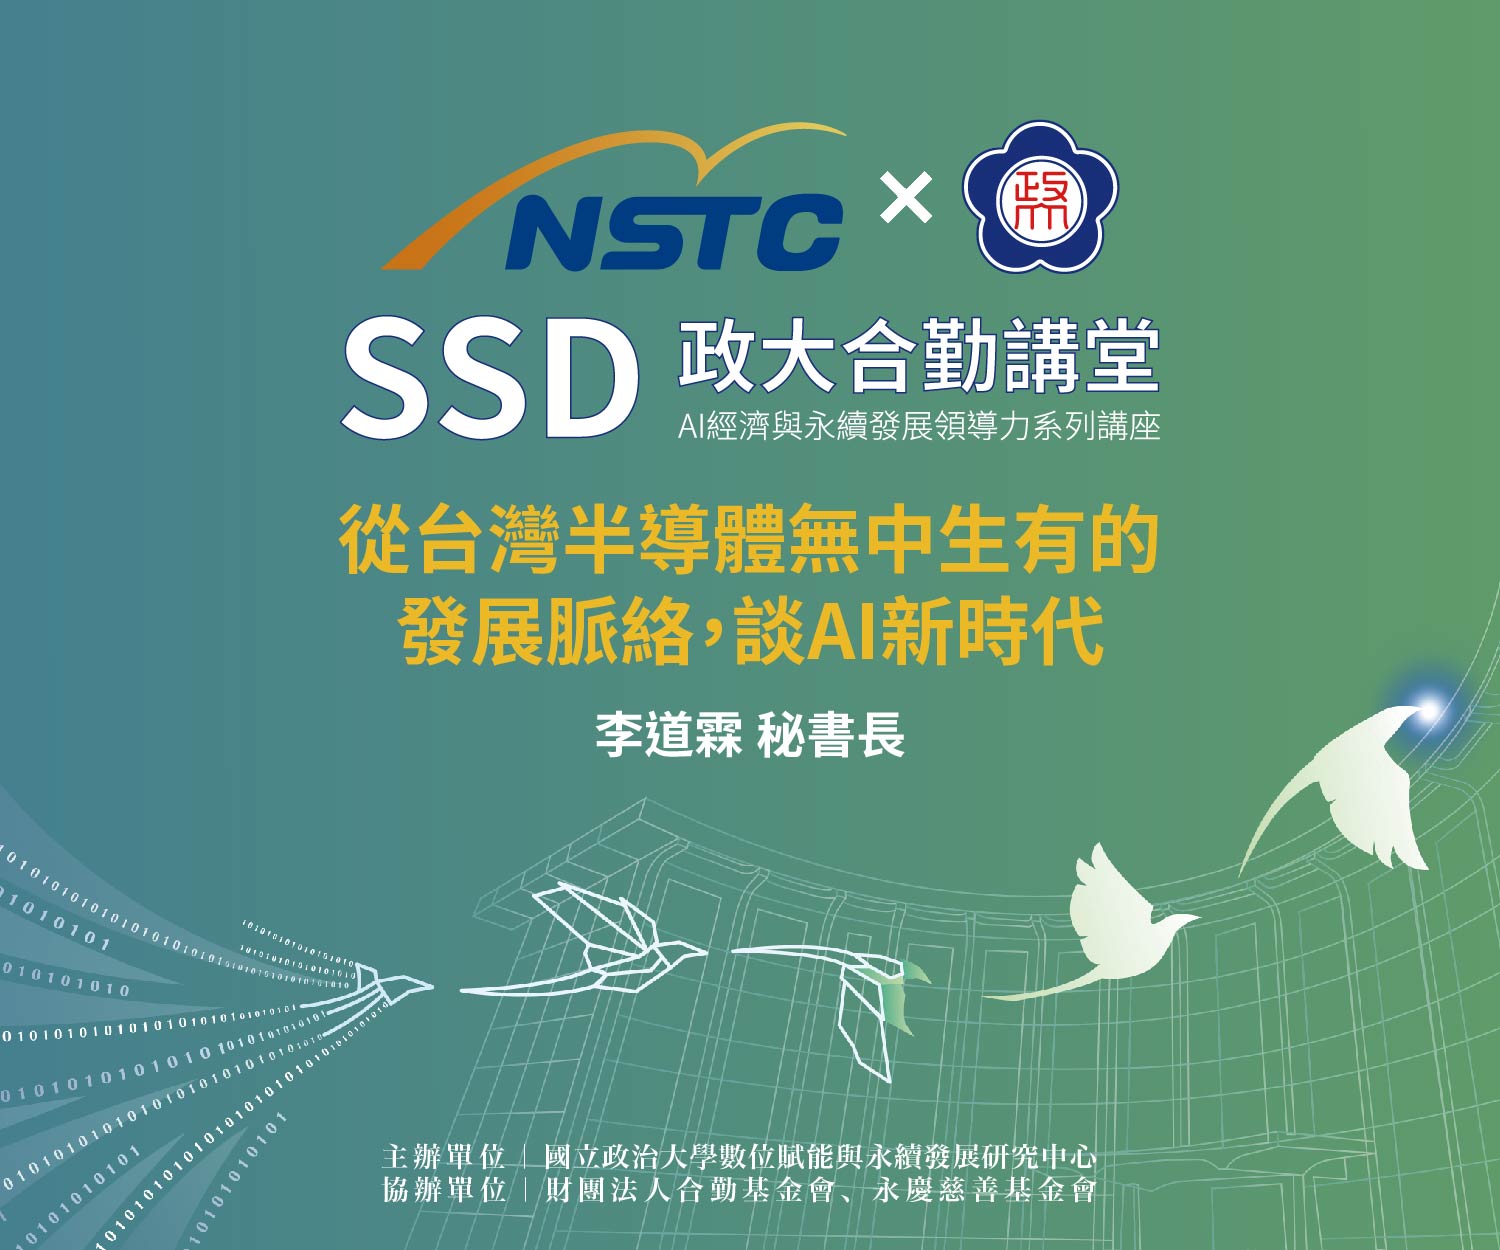 SSD政大合勤講堂｜AI經濟與永續發展領導力系列講座EP05 開放報名中！